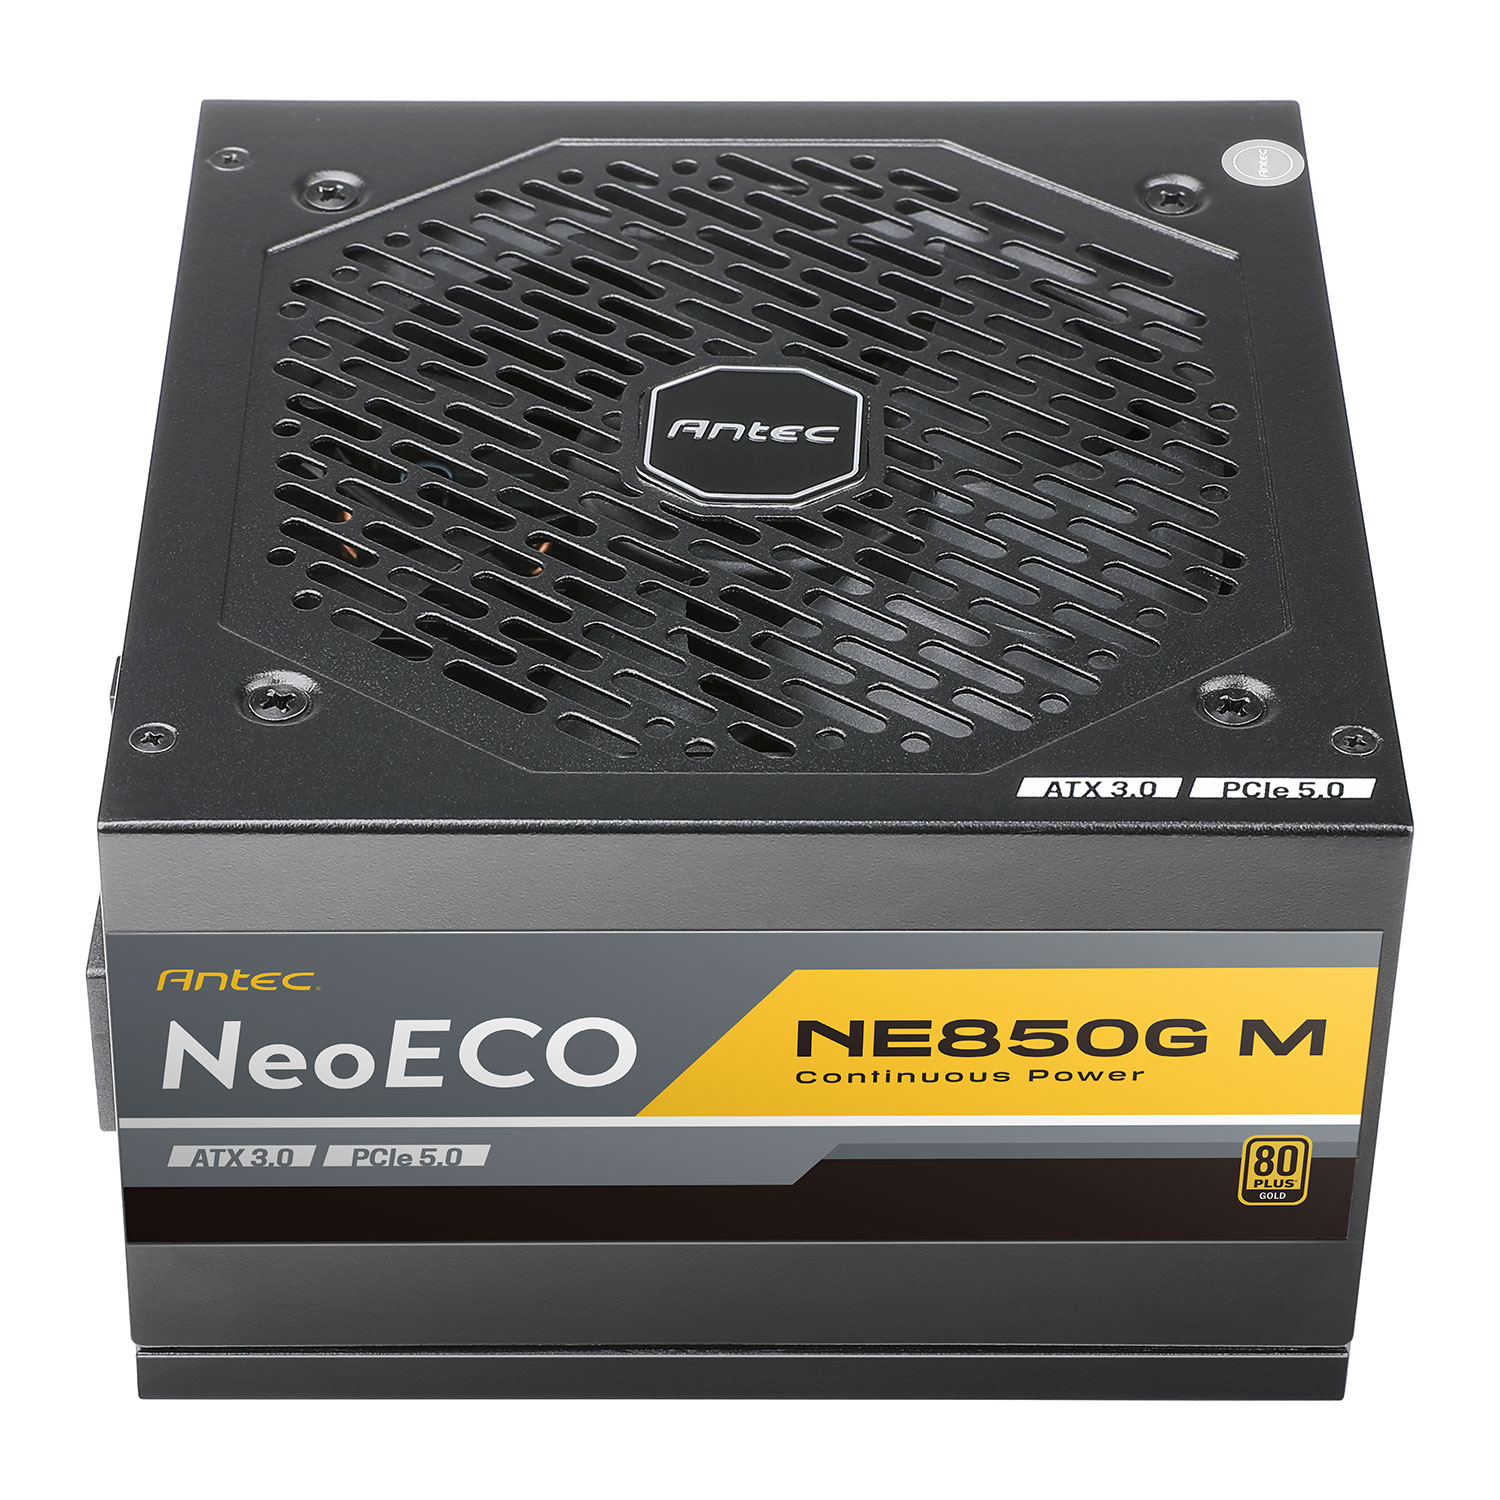 Antec NE850G M 850 Watt Fully Modular PCIe Gen 5 ATX3.0 80+ Gold Power Supply